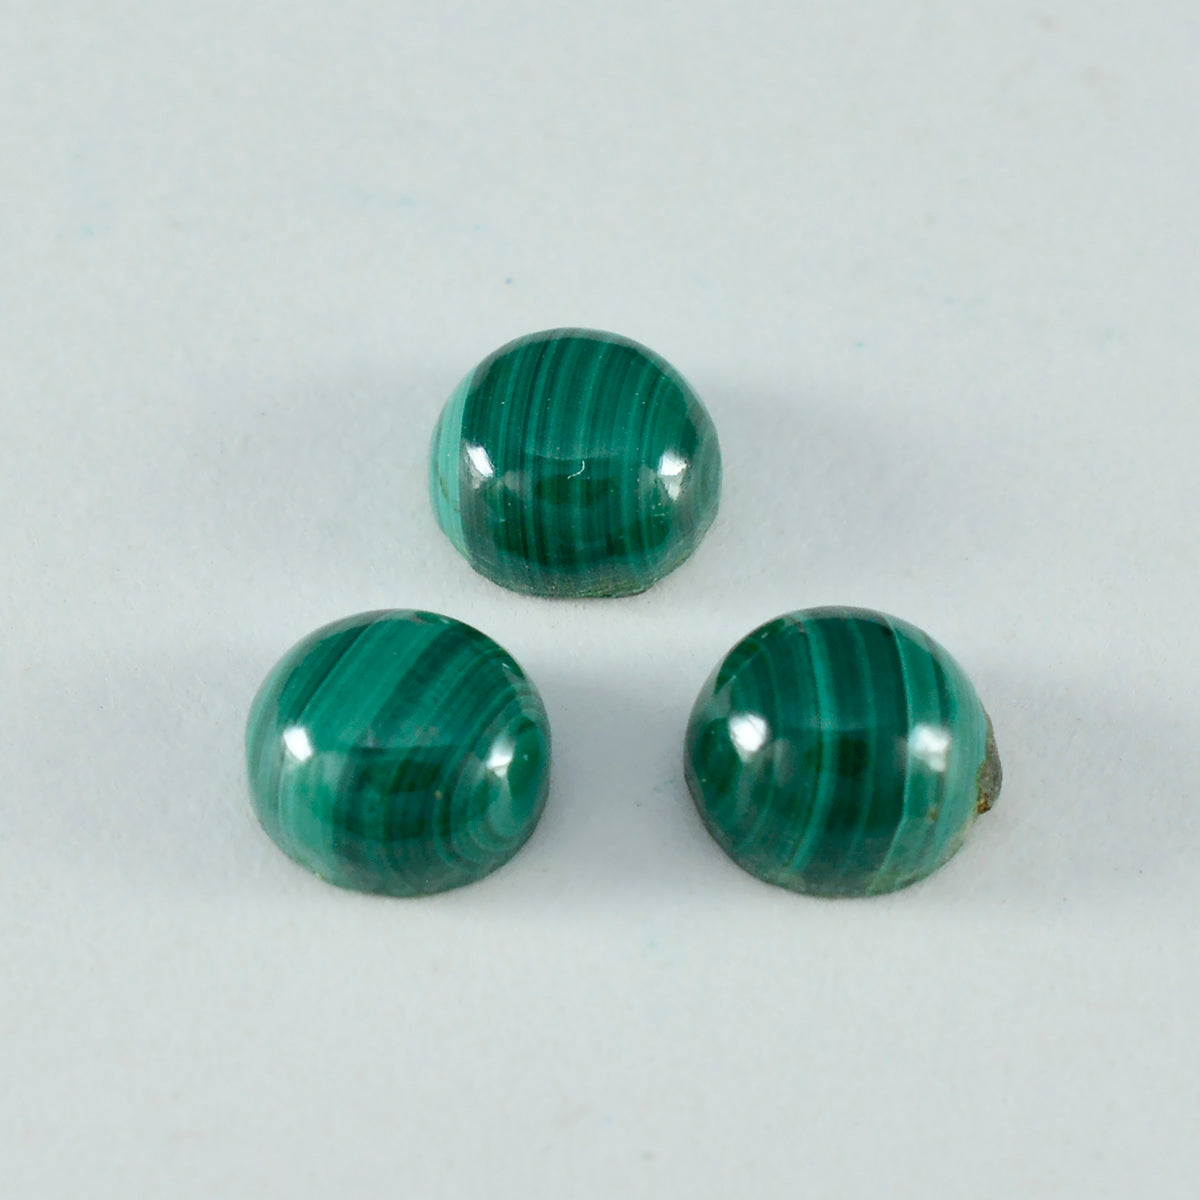 riyogems 1pc グリーン マラカイト カボション 6x6 mm ラウンド形状の優れた品質のルース宝石